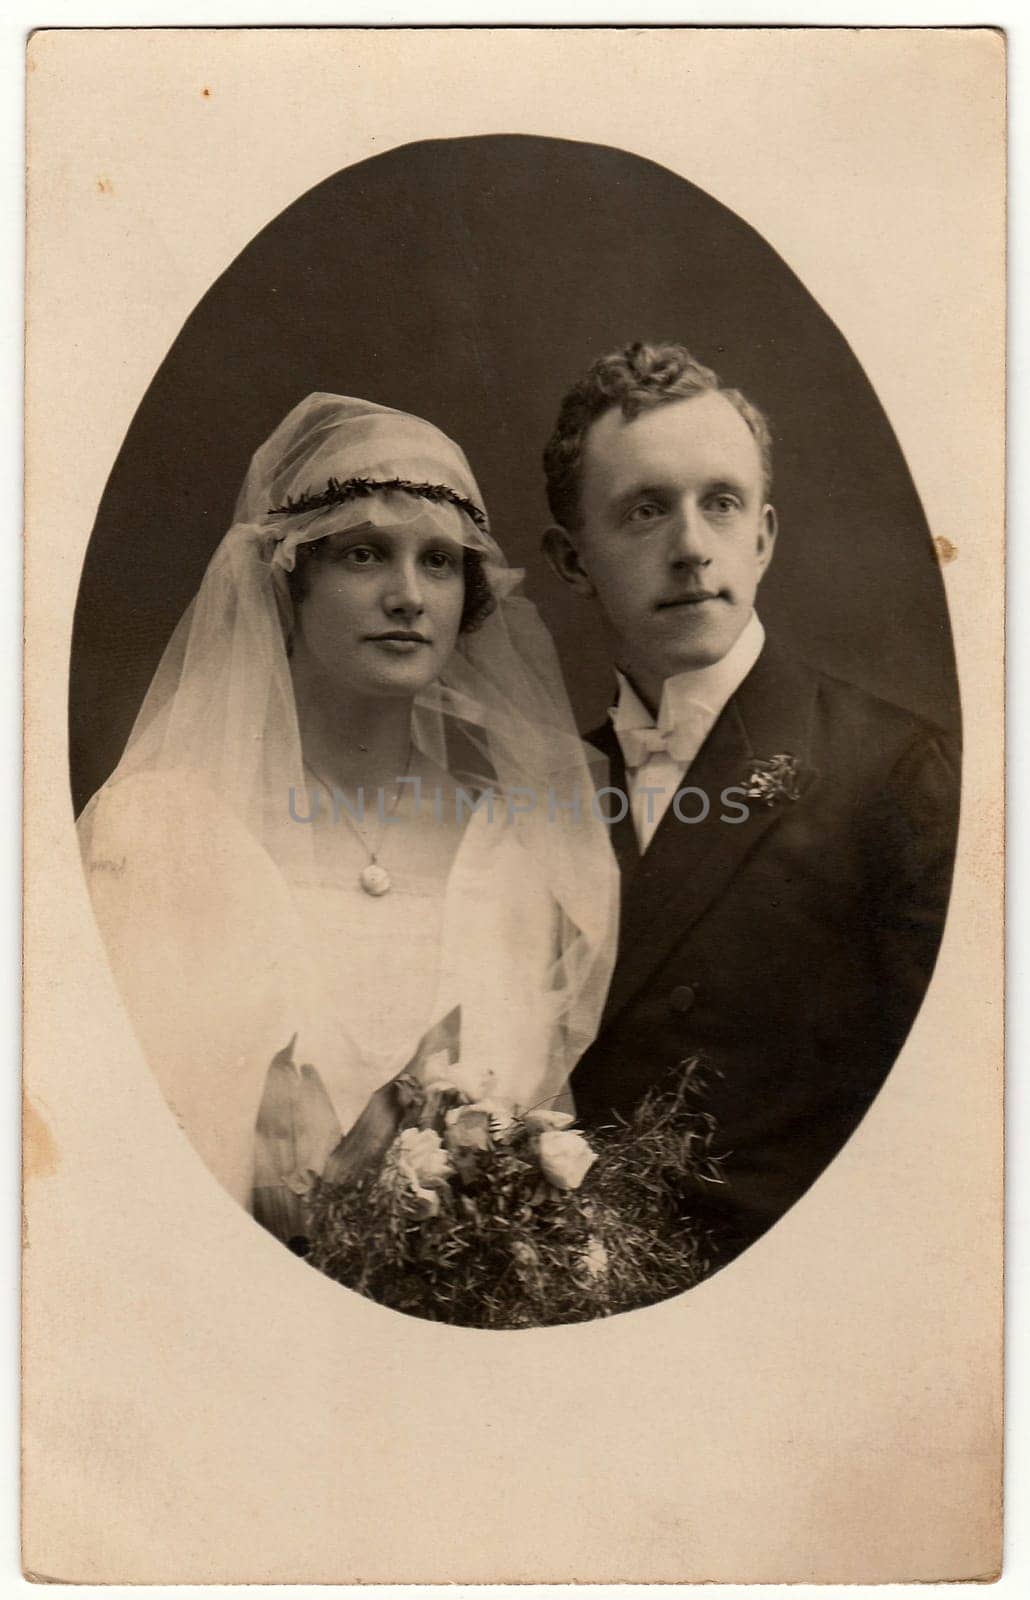 CHRASTAVA /KRATZAU), THE CZECHOSLOVAK REPUBLIC - CIRCA 1930s: Vintage photo of newlyweds. Bride wears a veil. Black white antique studio portrait. Photo is oval shape.